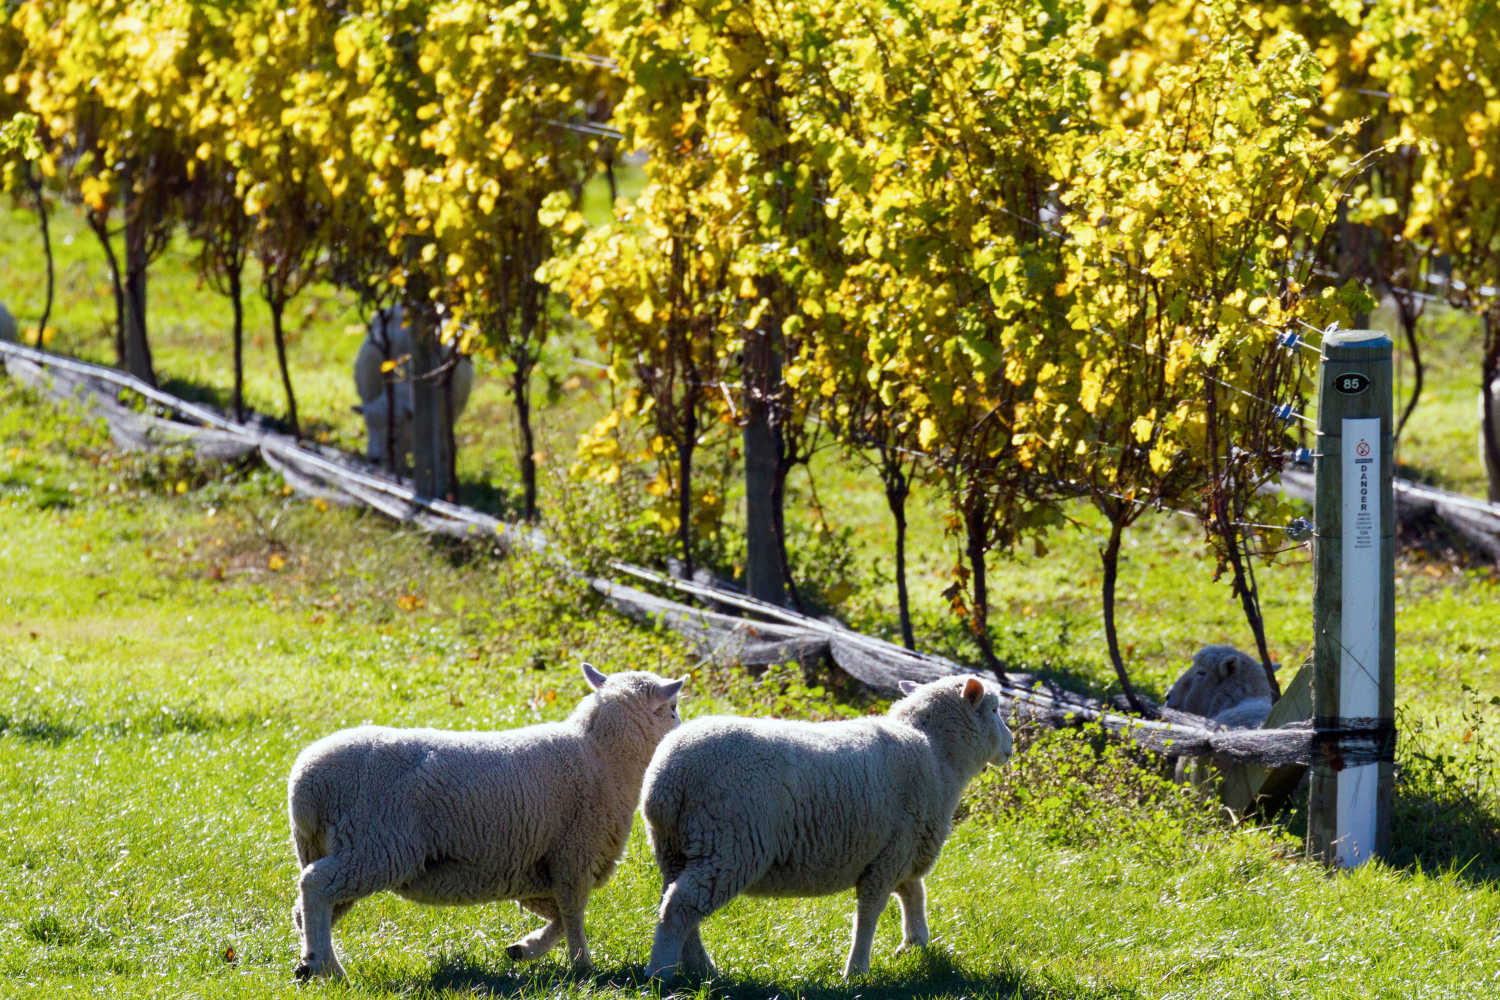 Sheep grazing in vineyard